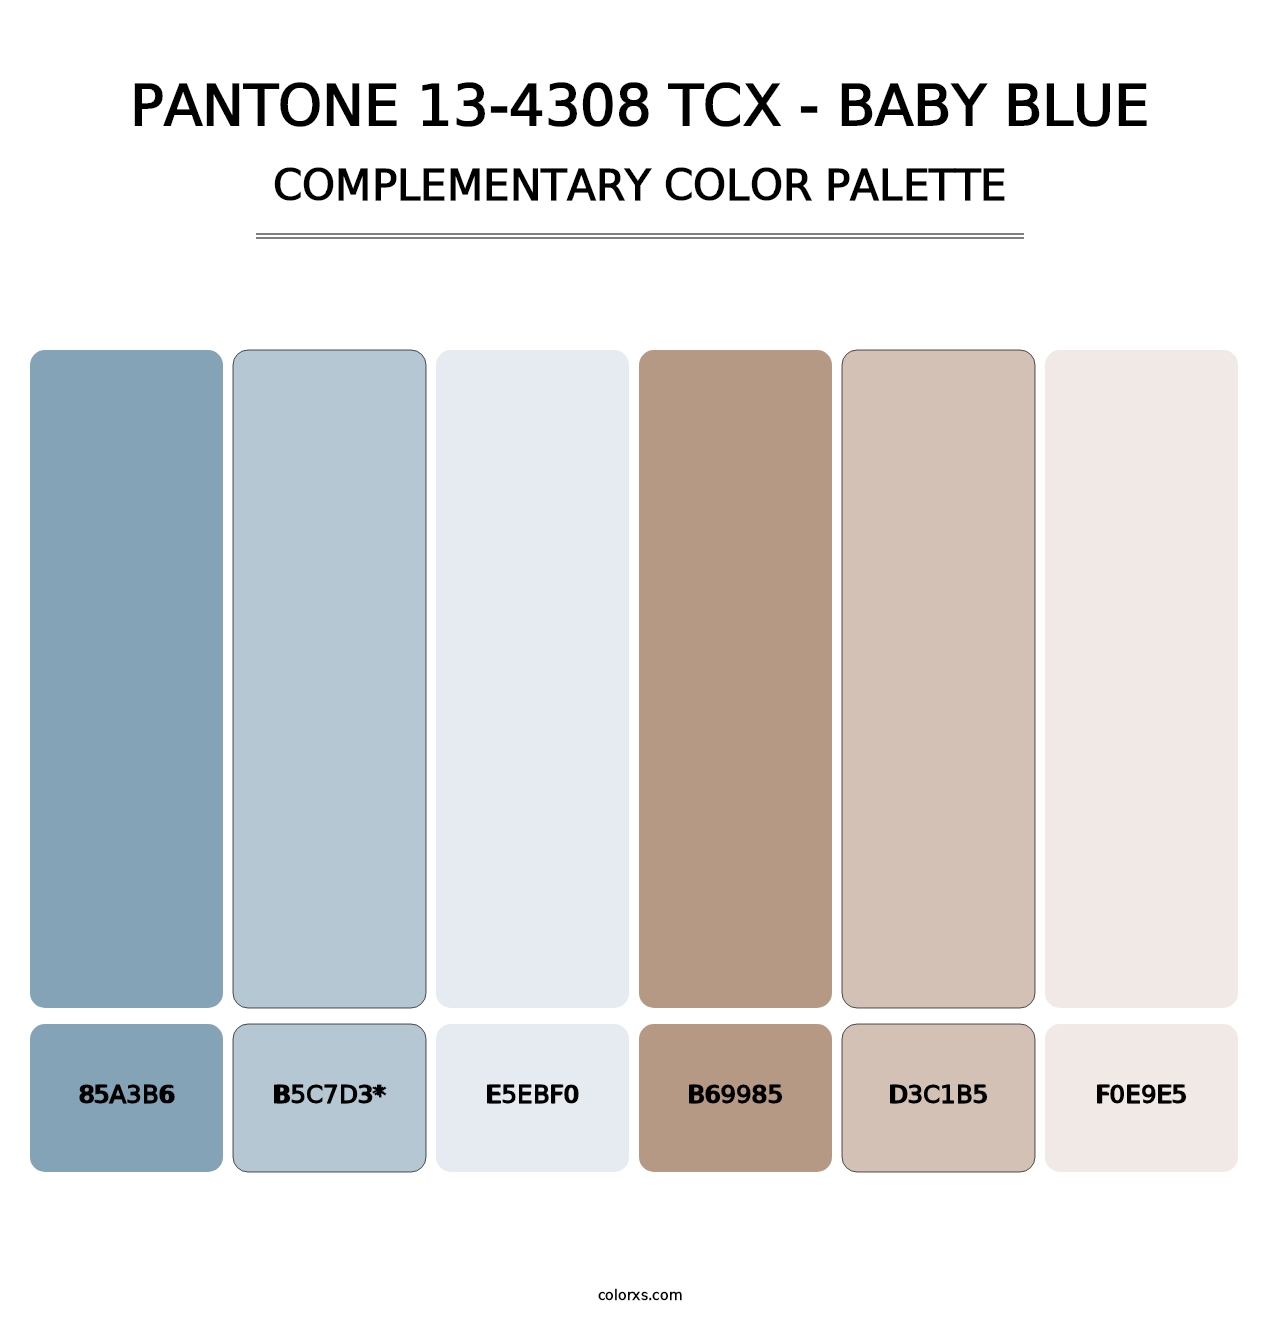 PANTONE 13-4308 TCX - Baby Blue - Complementary Color Palette